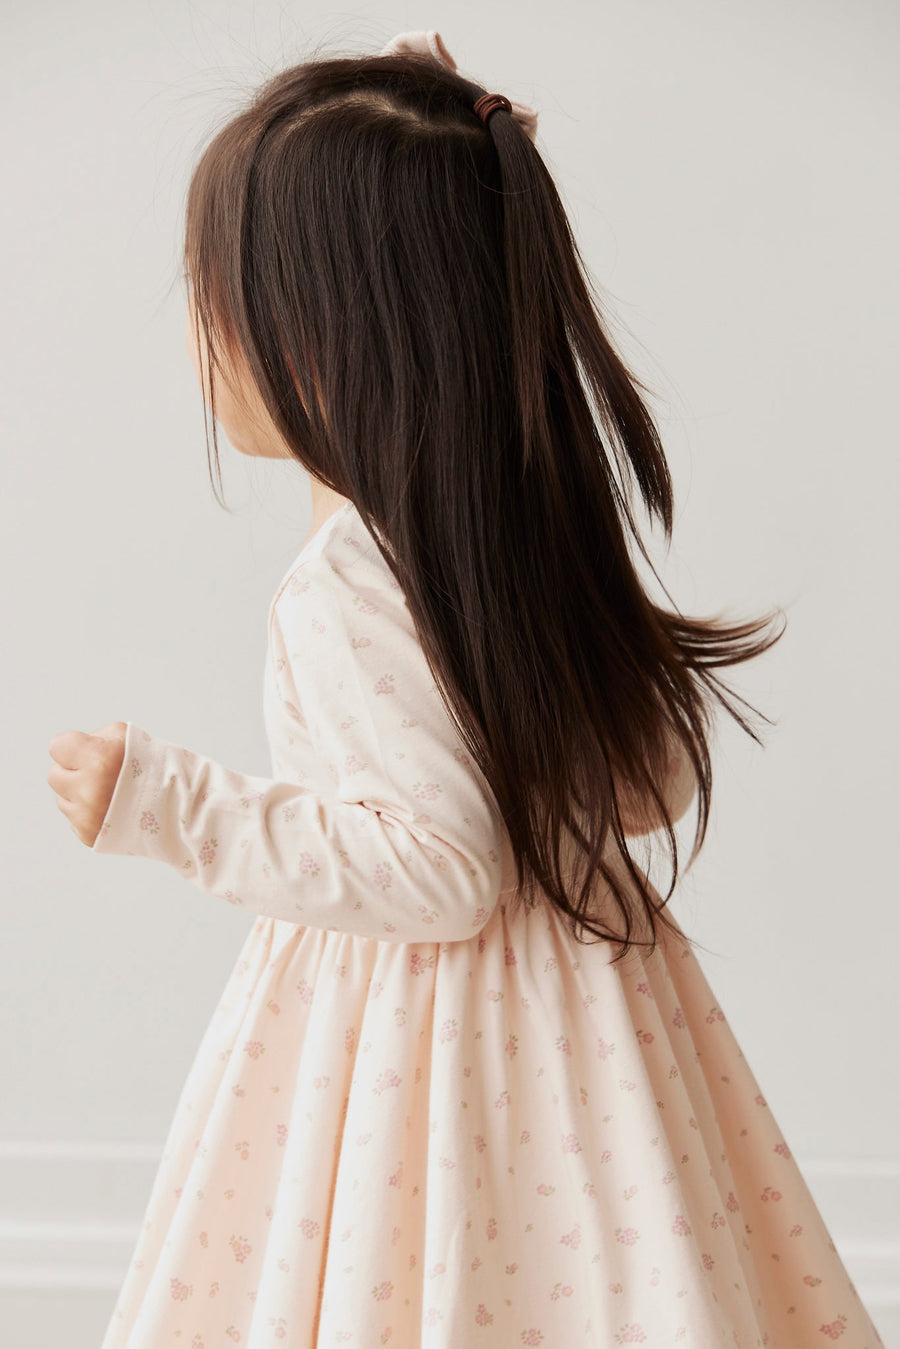 Organic Cotton Tallulah Dress - Irina Shell Childrens Dress from Jamie Kay USA